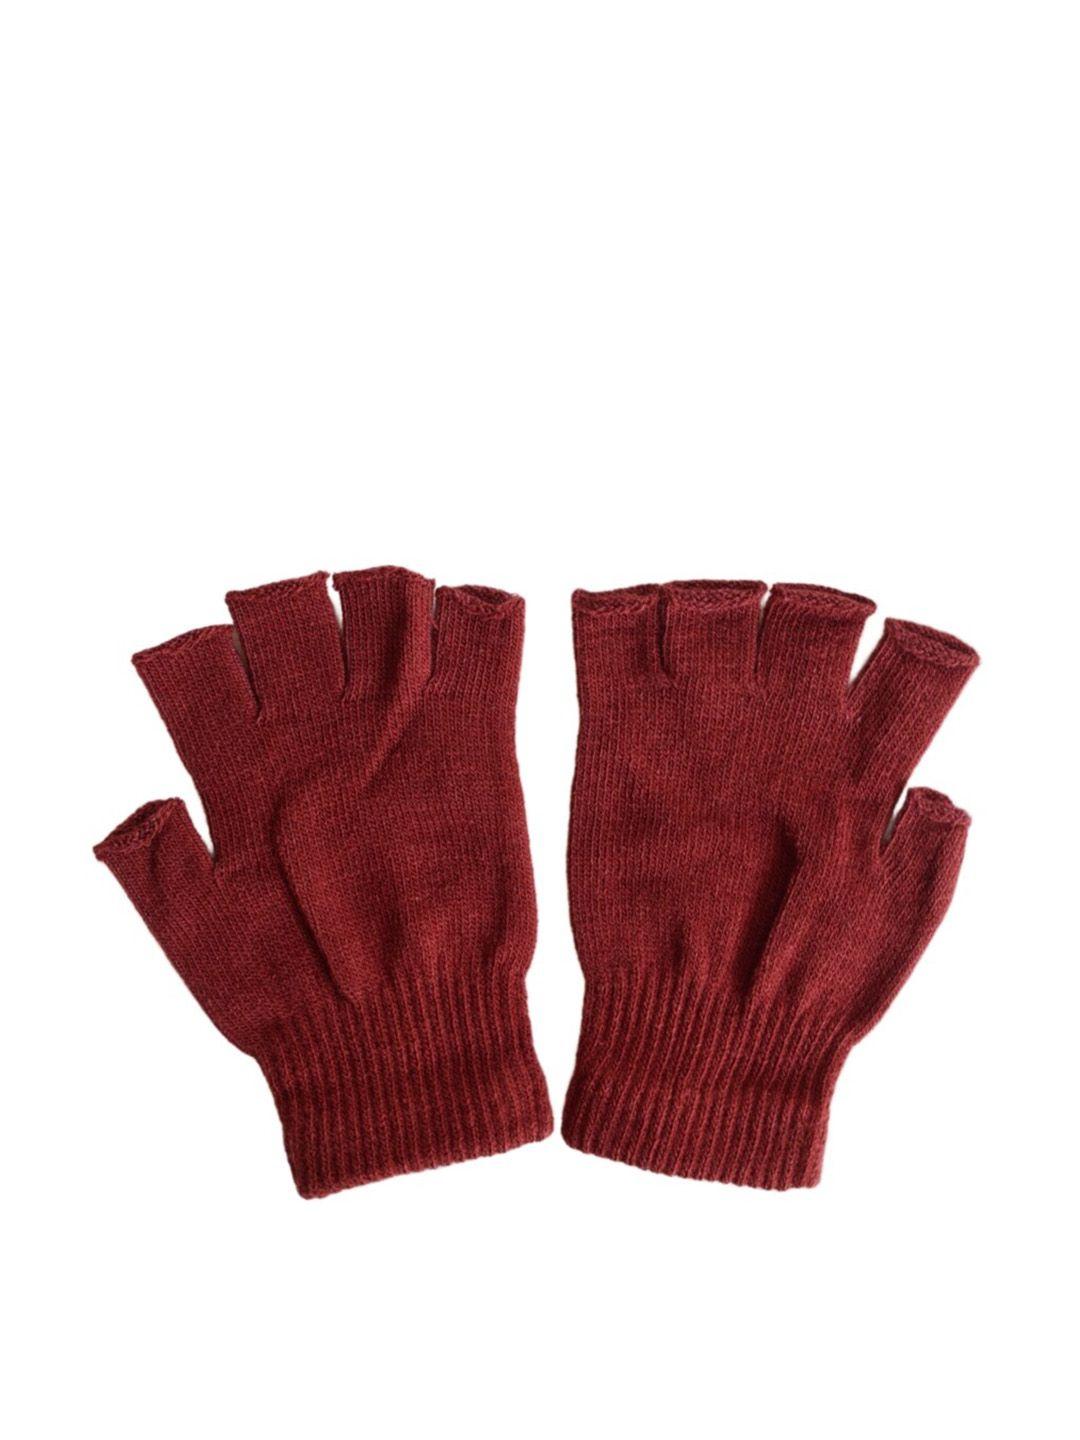 tipy tipy tap girls half finger acrylic winter gloves